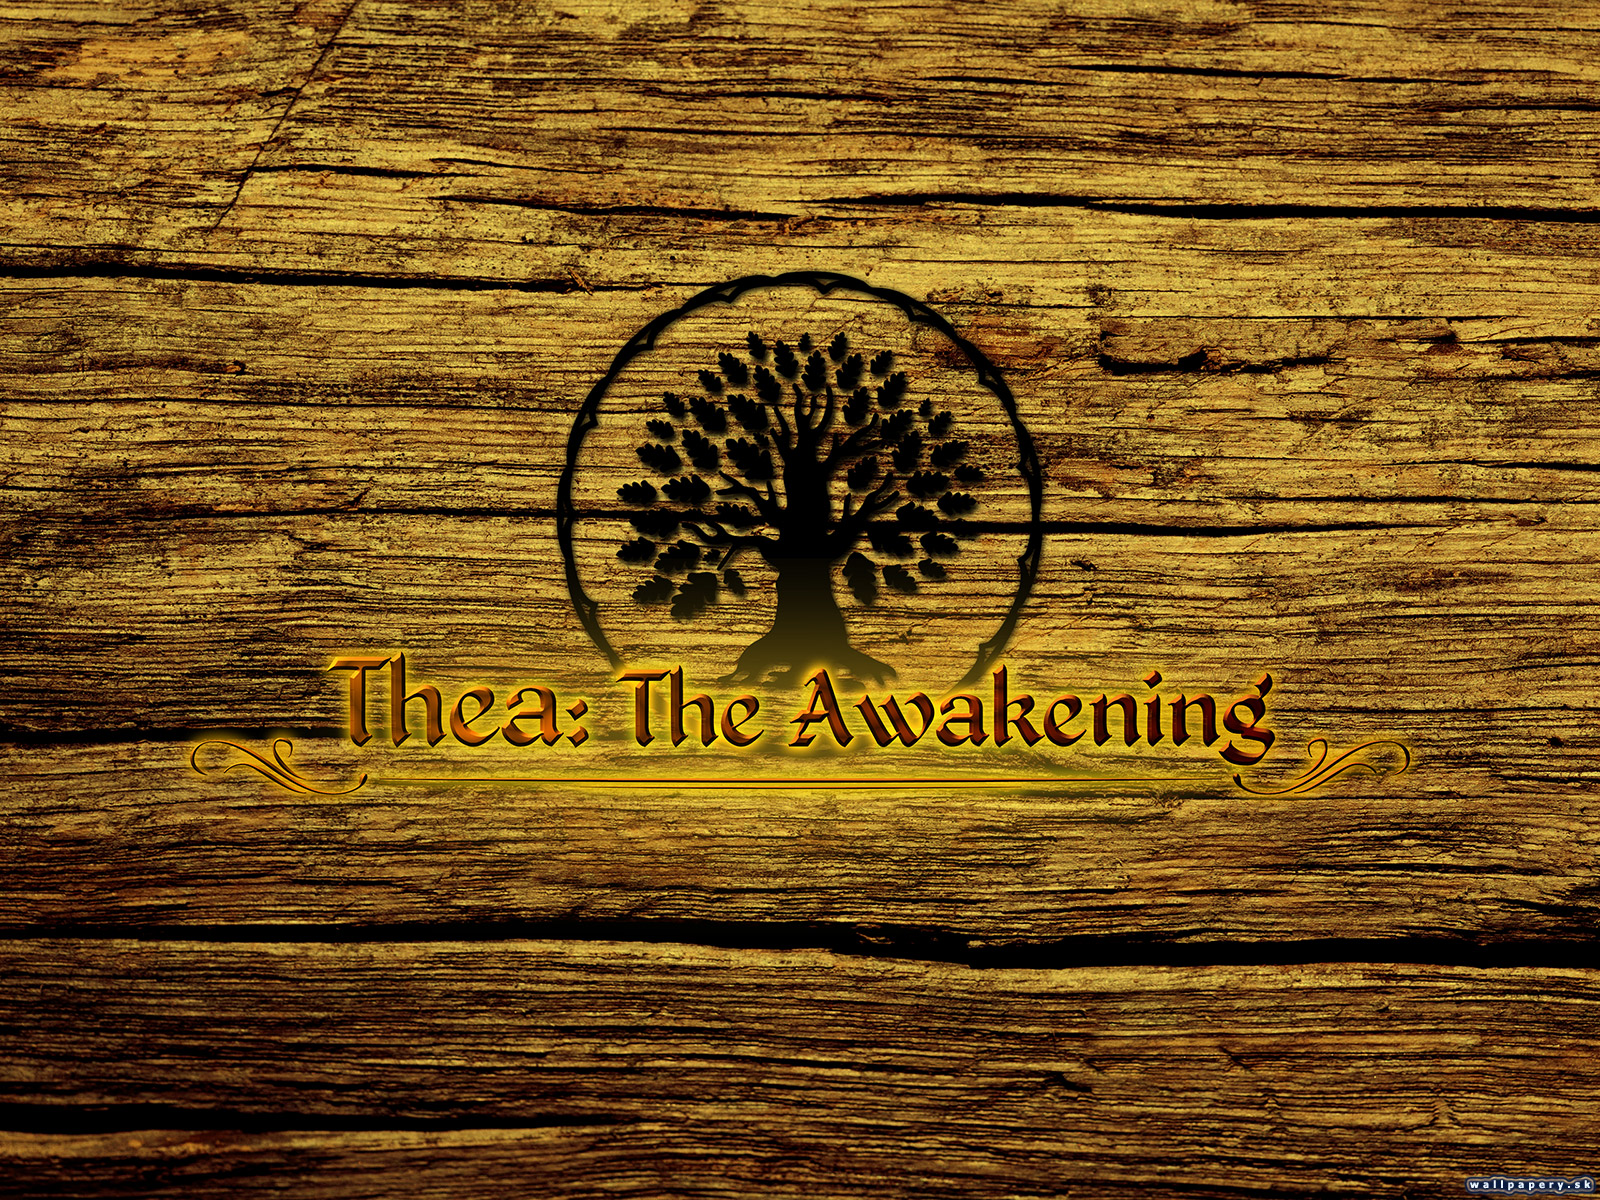 Thea: The Awakening - wallpaper 2